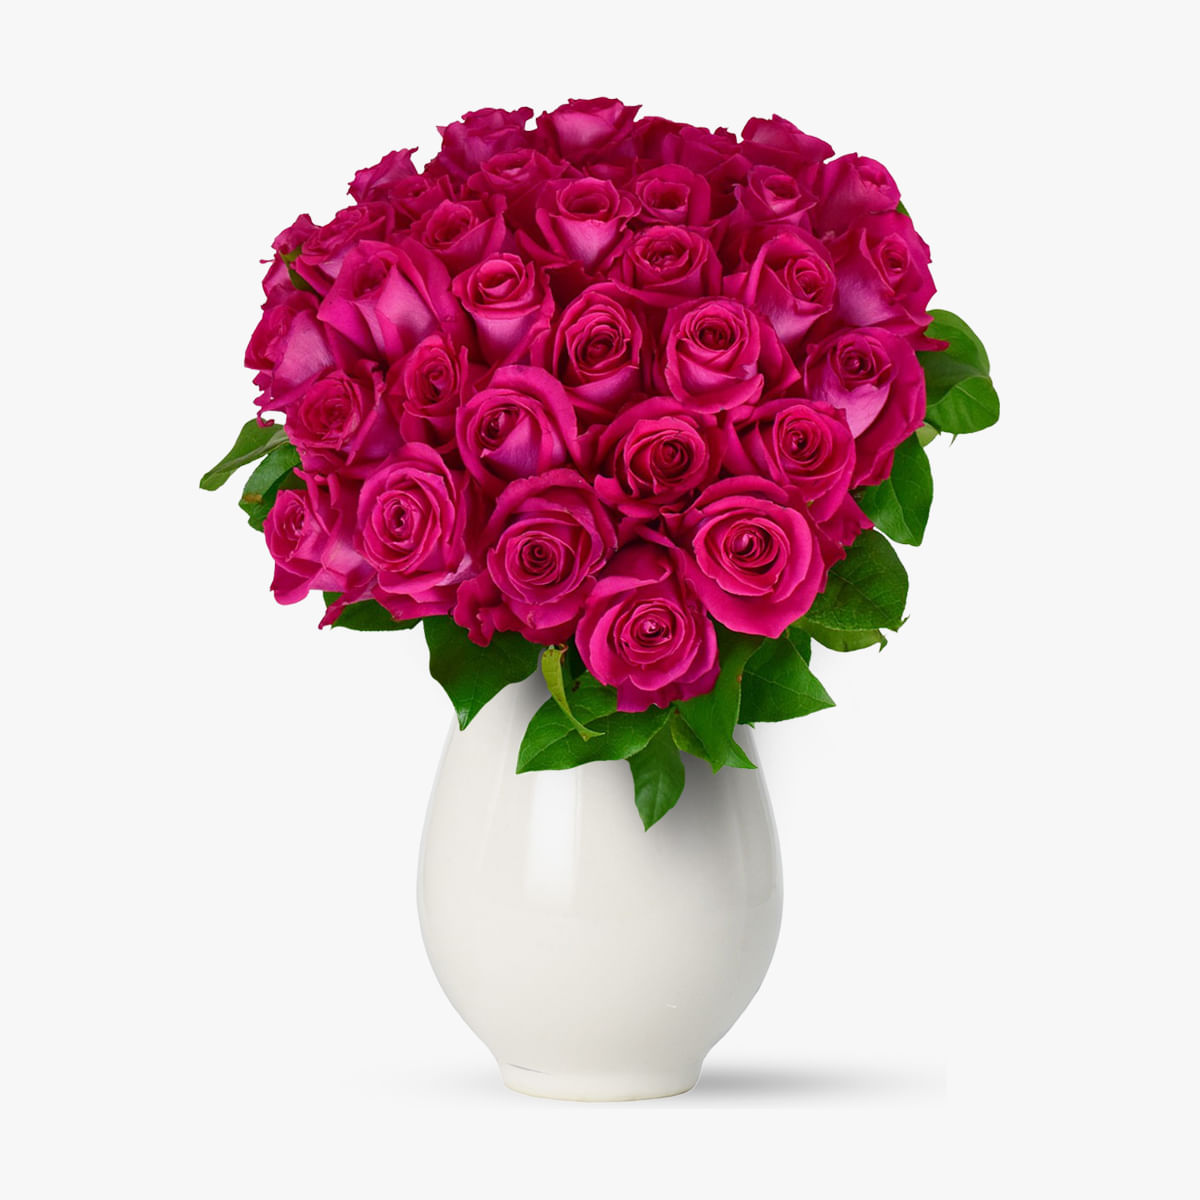 Buchet de 45 trandafiri roz – Standard Buchet